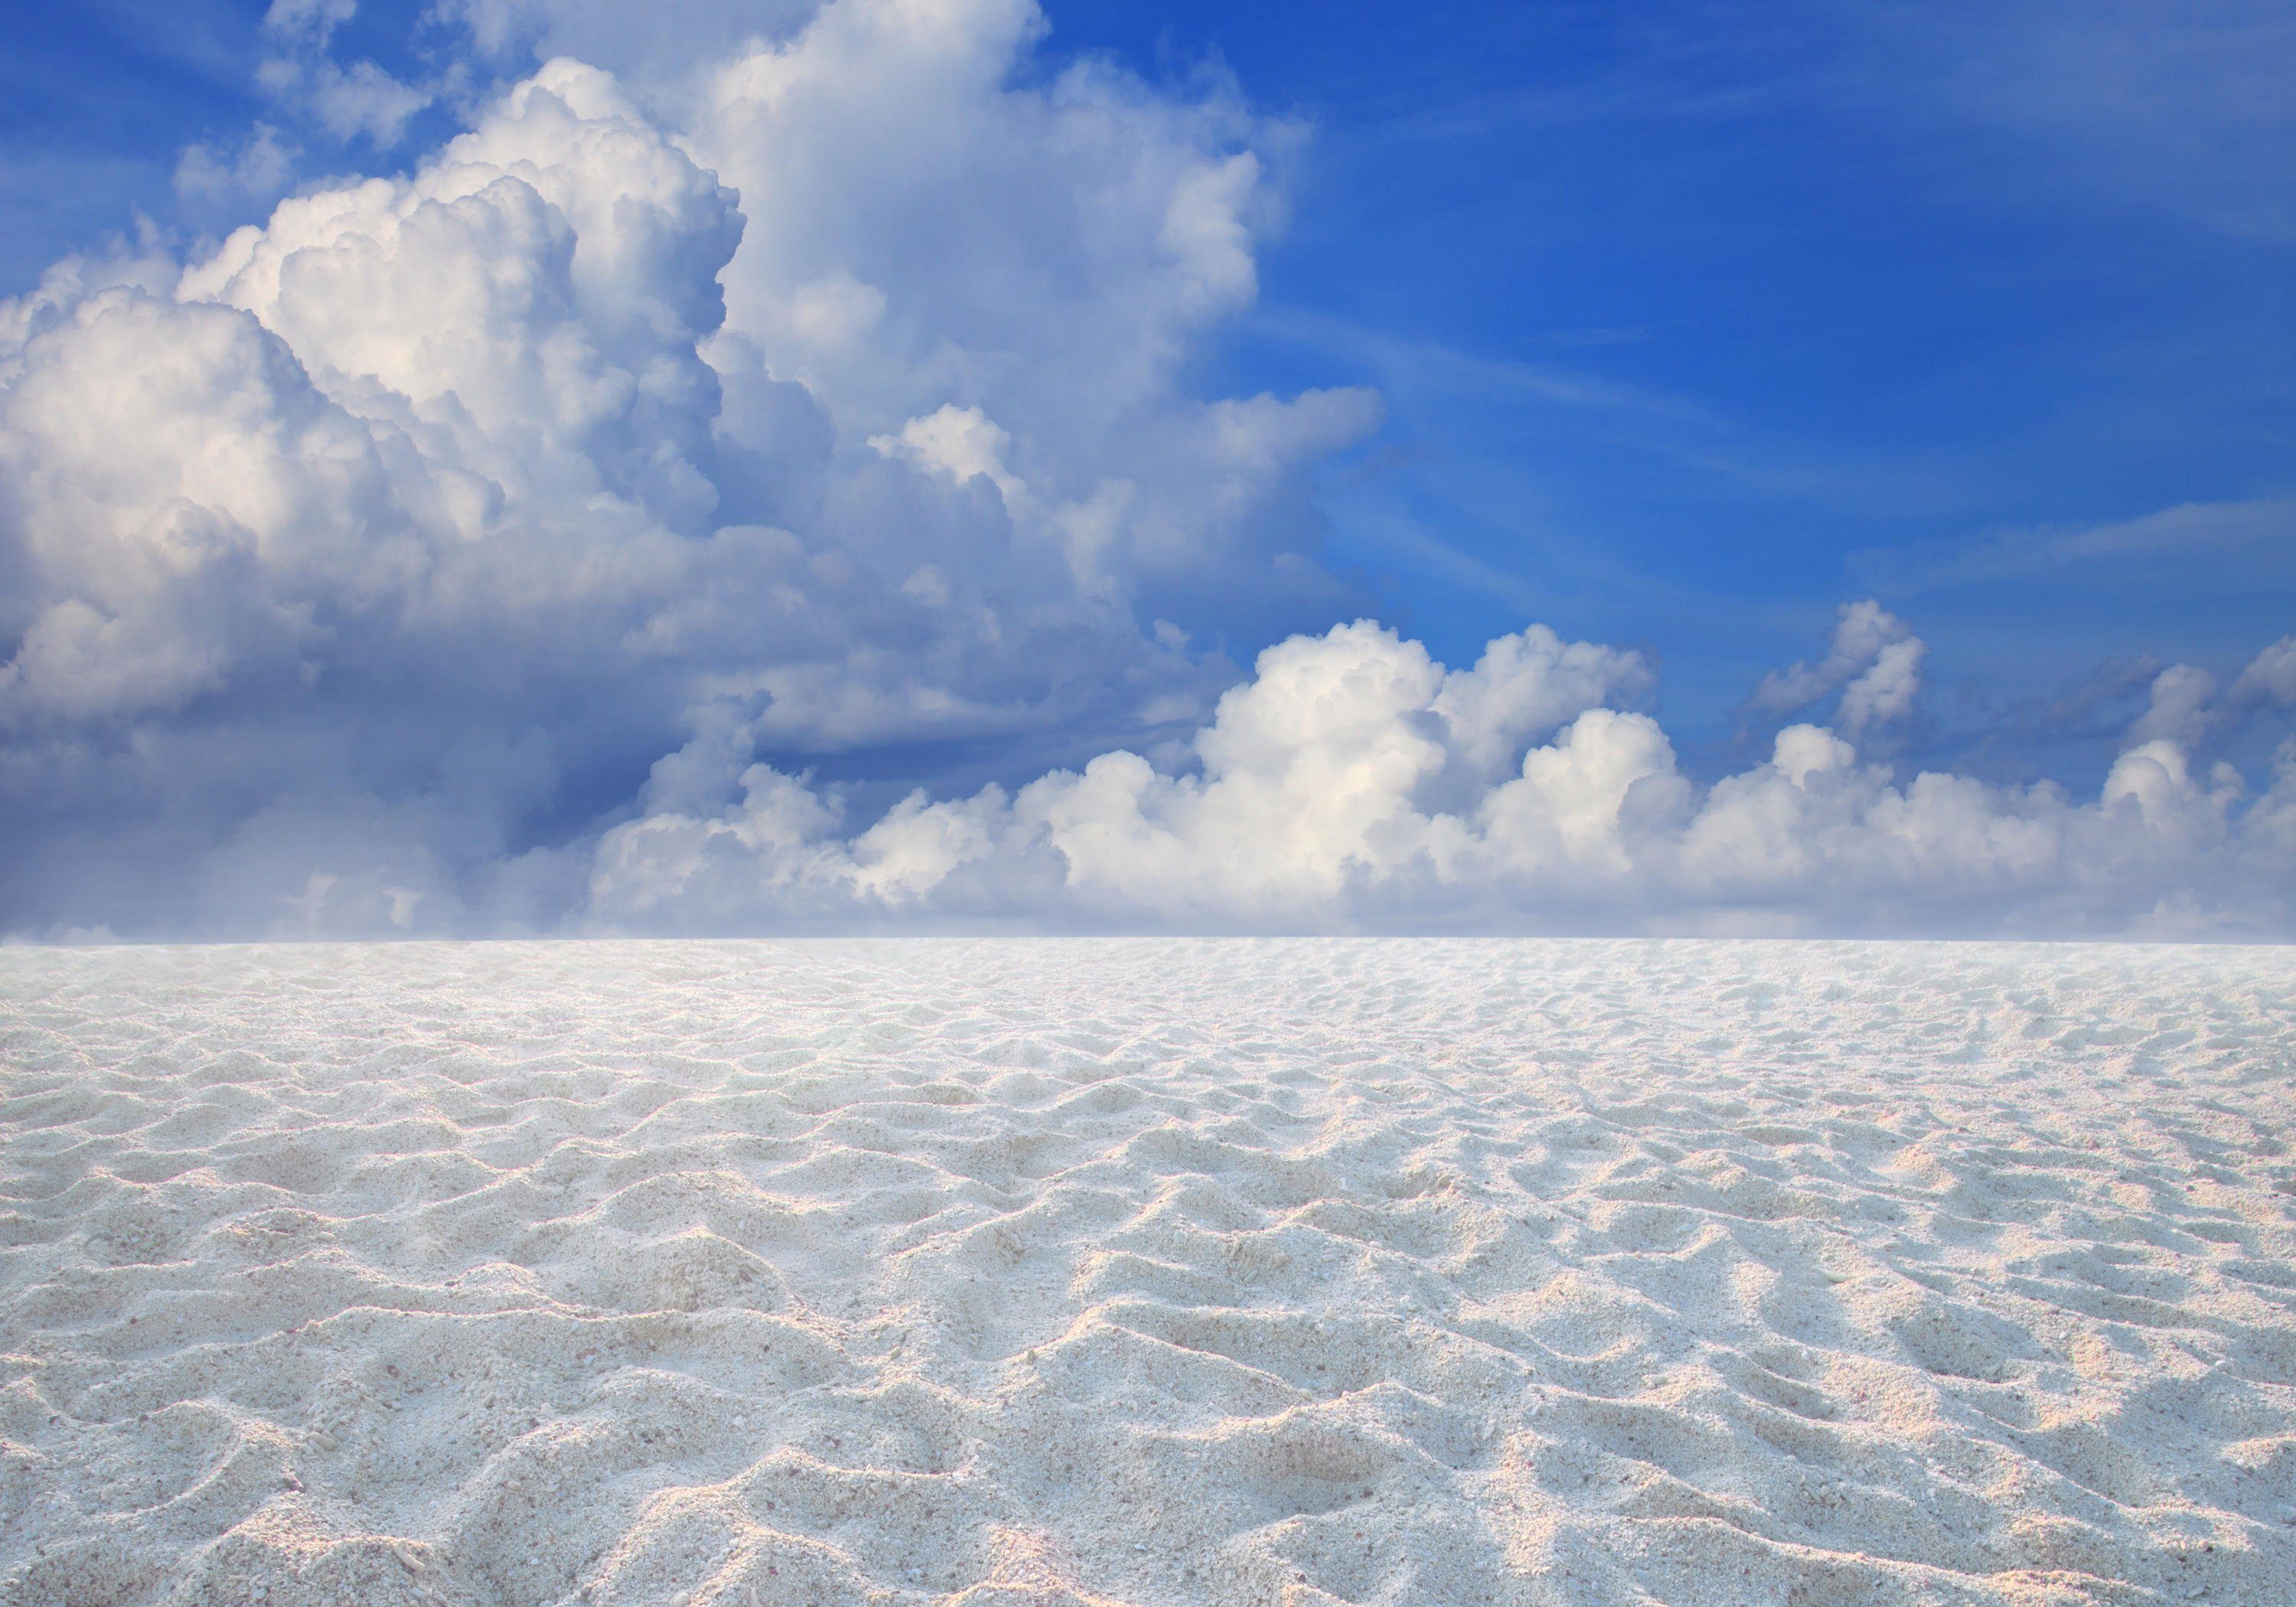 wandmotiv24 Fototapete Sand Landschaft mit einem blauen Himmel, glatt, Wandtapete, Motivtapete, matt, Vliestapete